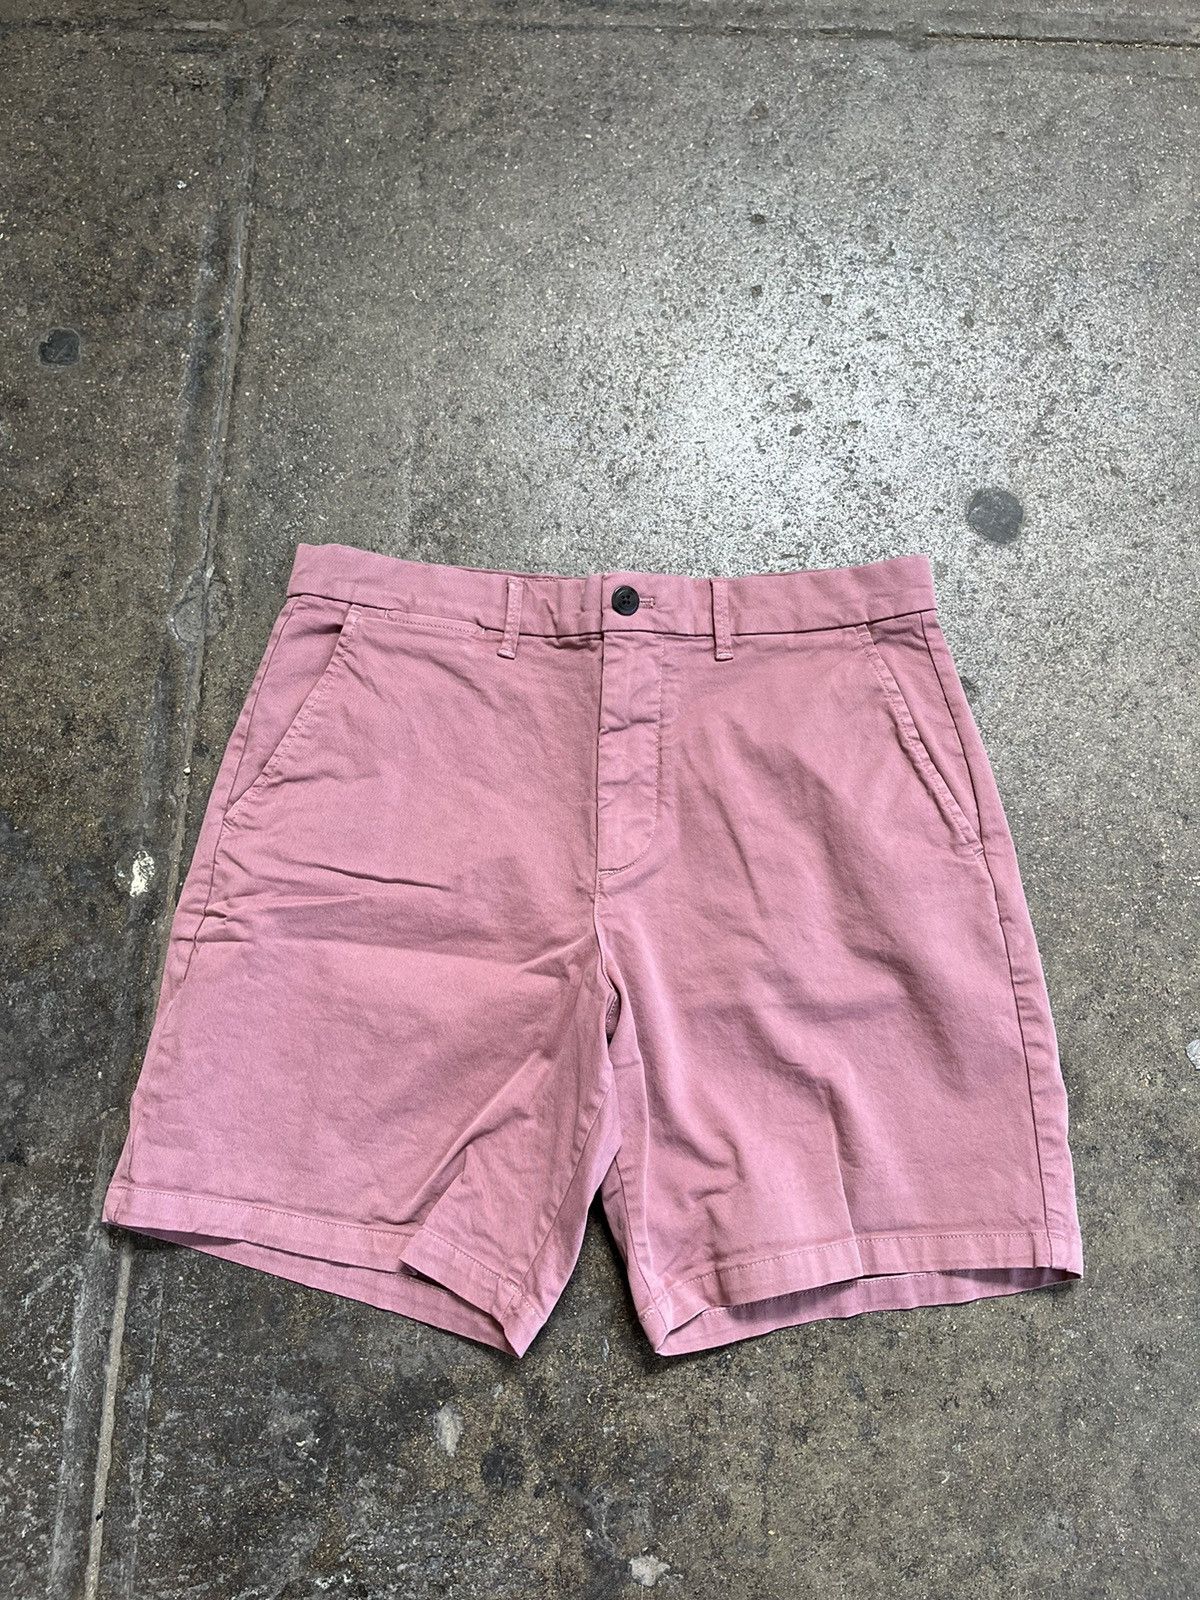 Vintage Gap Chino Shorts | Grailed